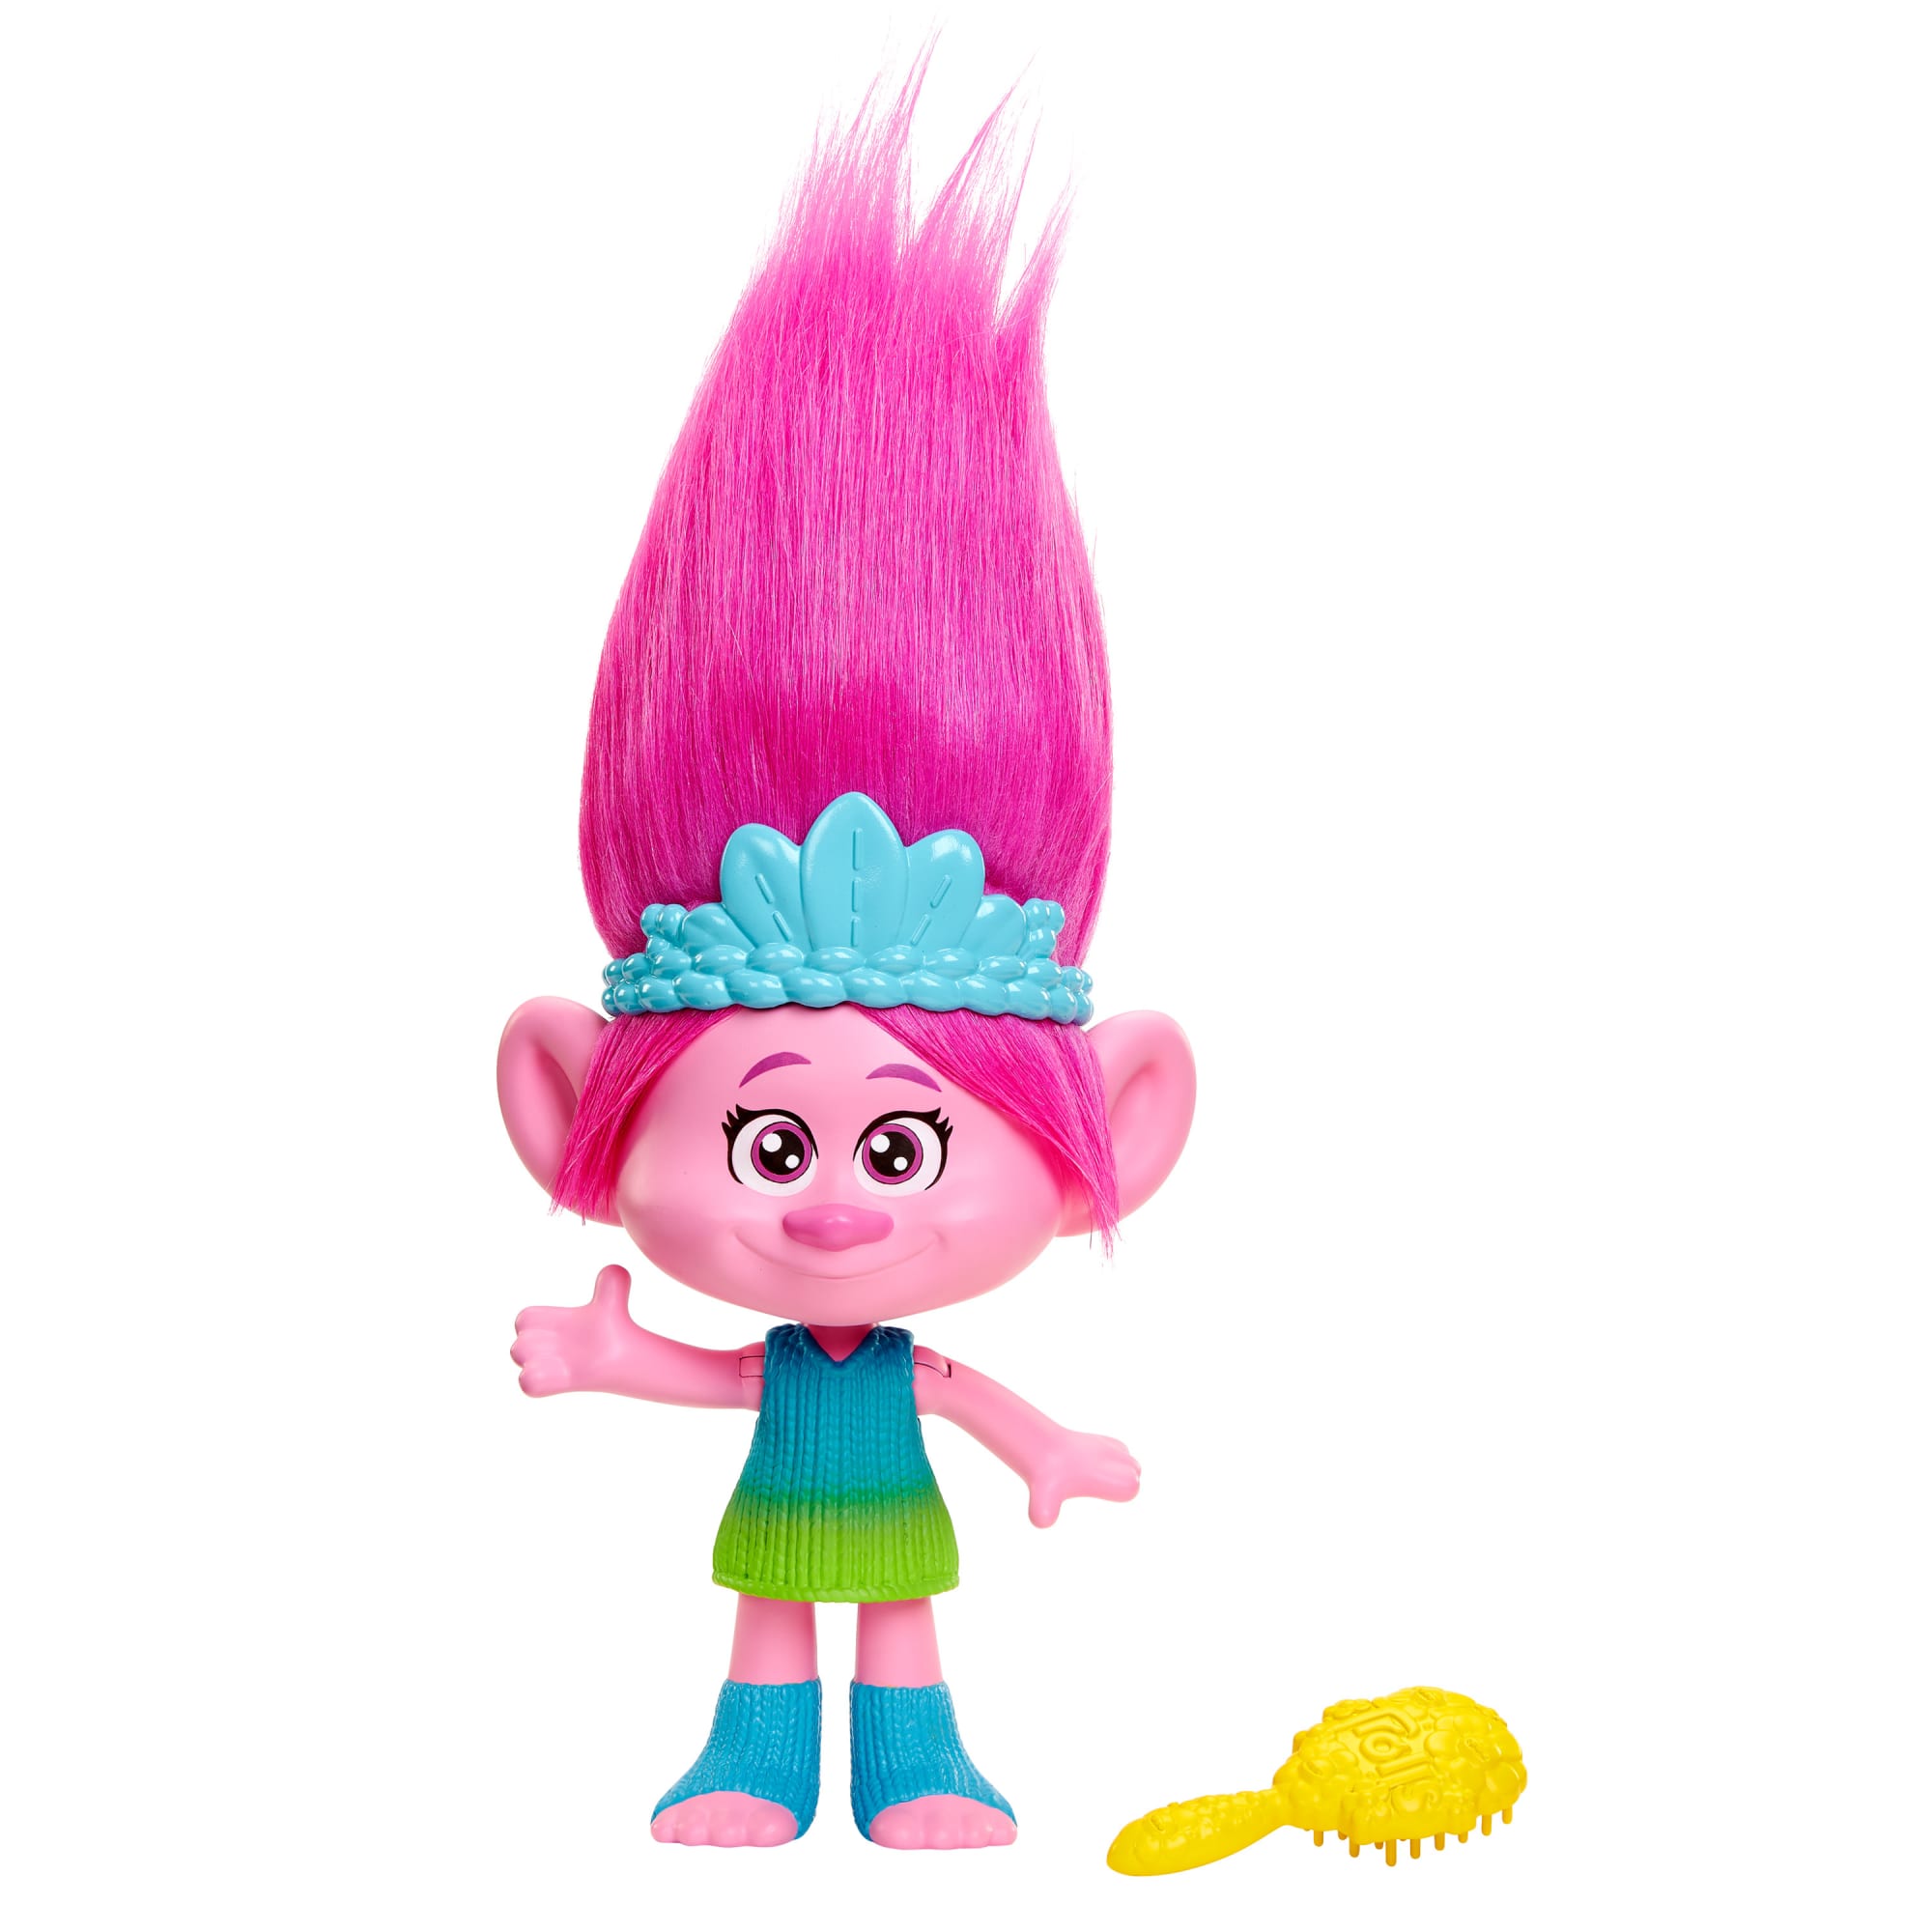 Opening the cutest Polly Pocket & DreamWorks Trolls playset with Poppy, Trolls 3